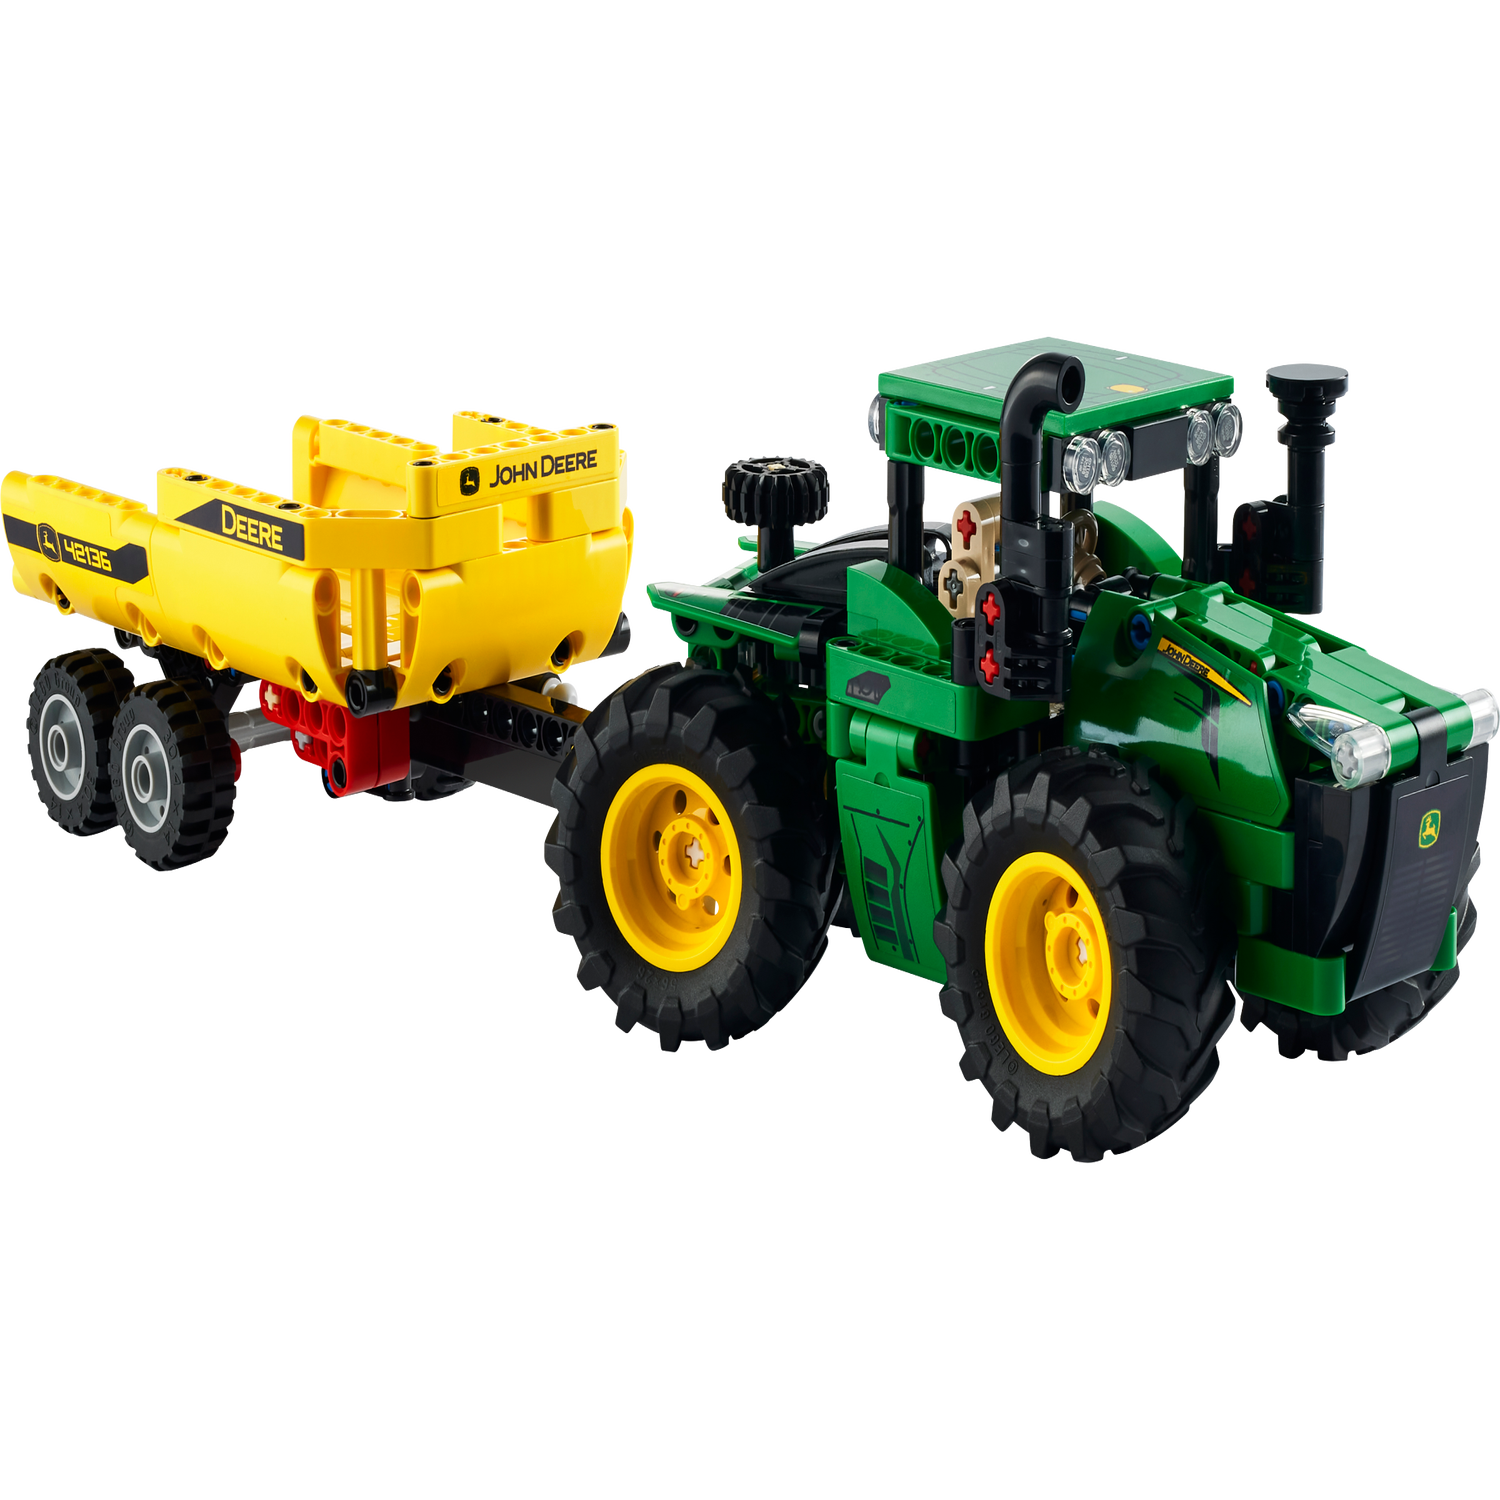 Lego John Deere 7930 moc  Lego tractor, Lego traktor, Lego projects